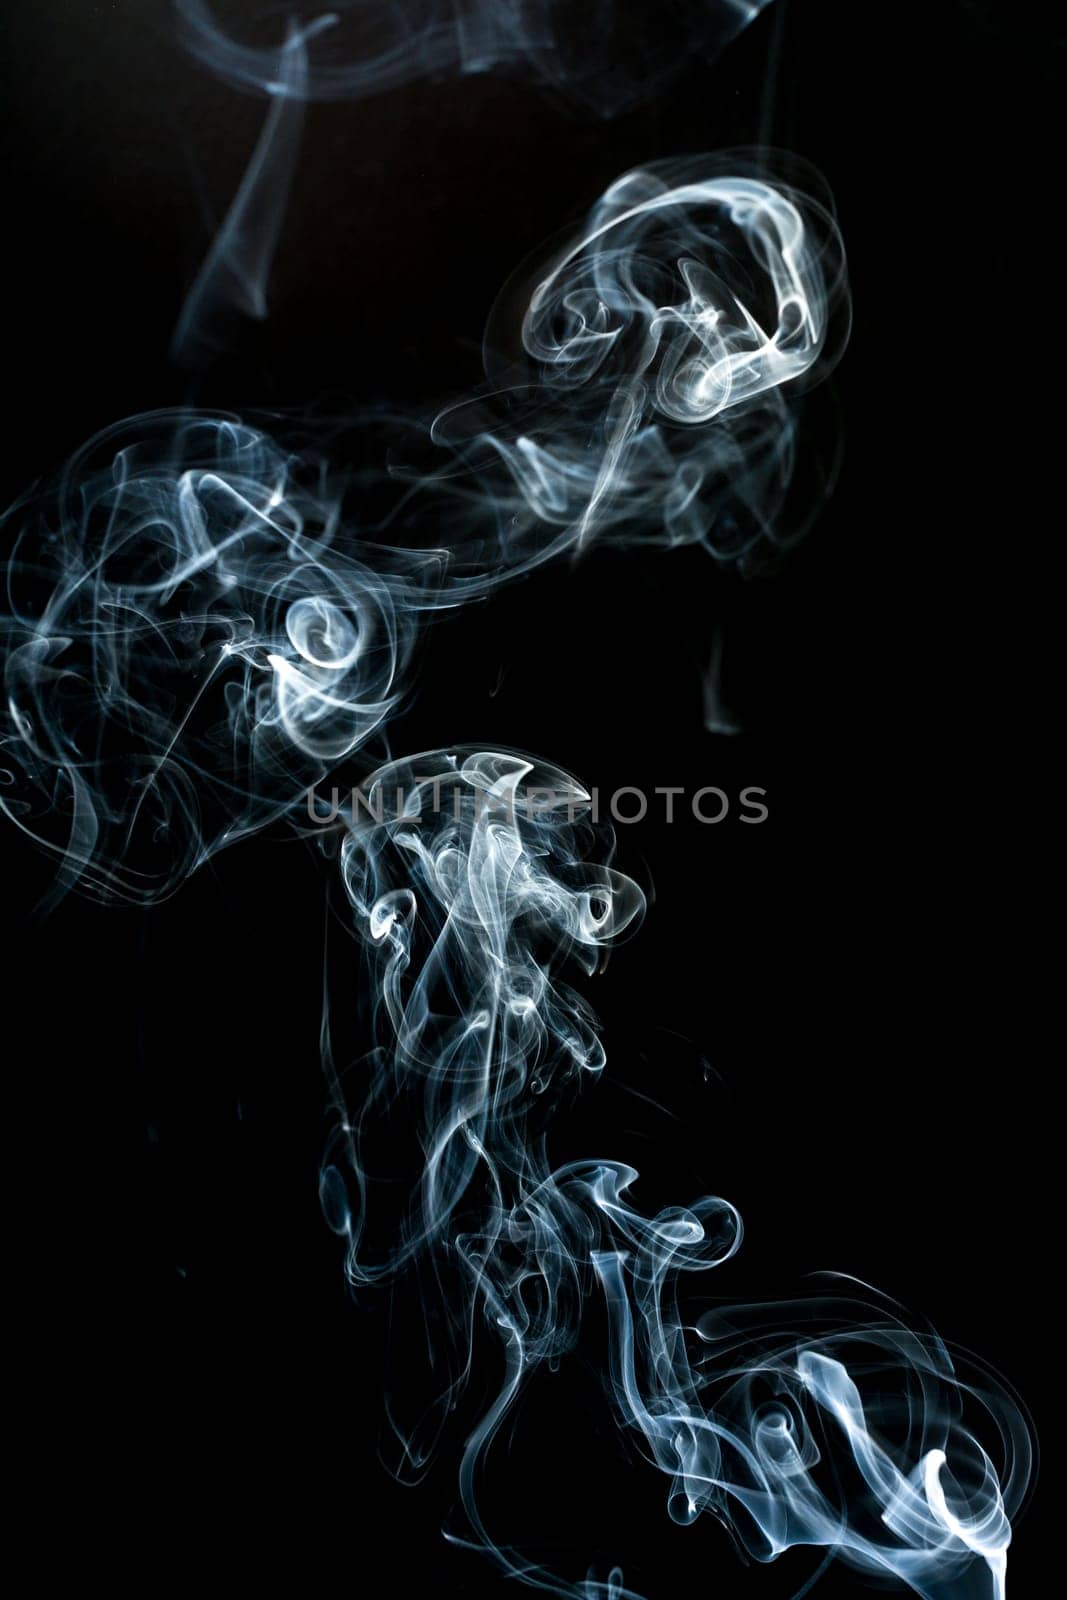 smoke cloud with black background. fog texture by zartarn